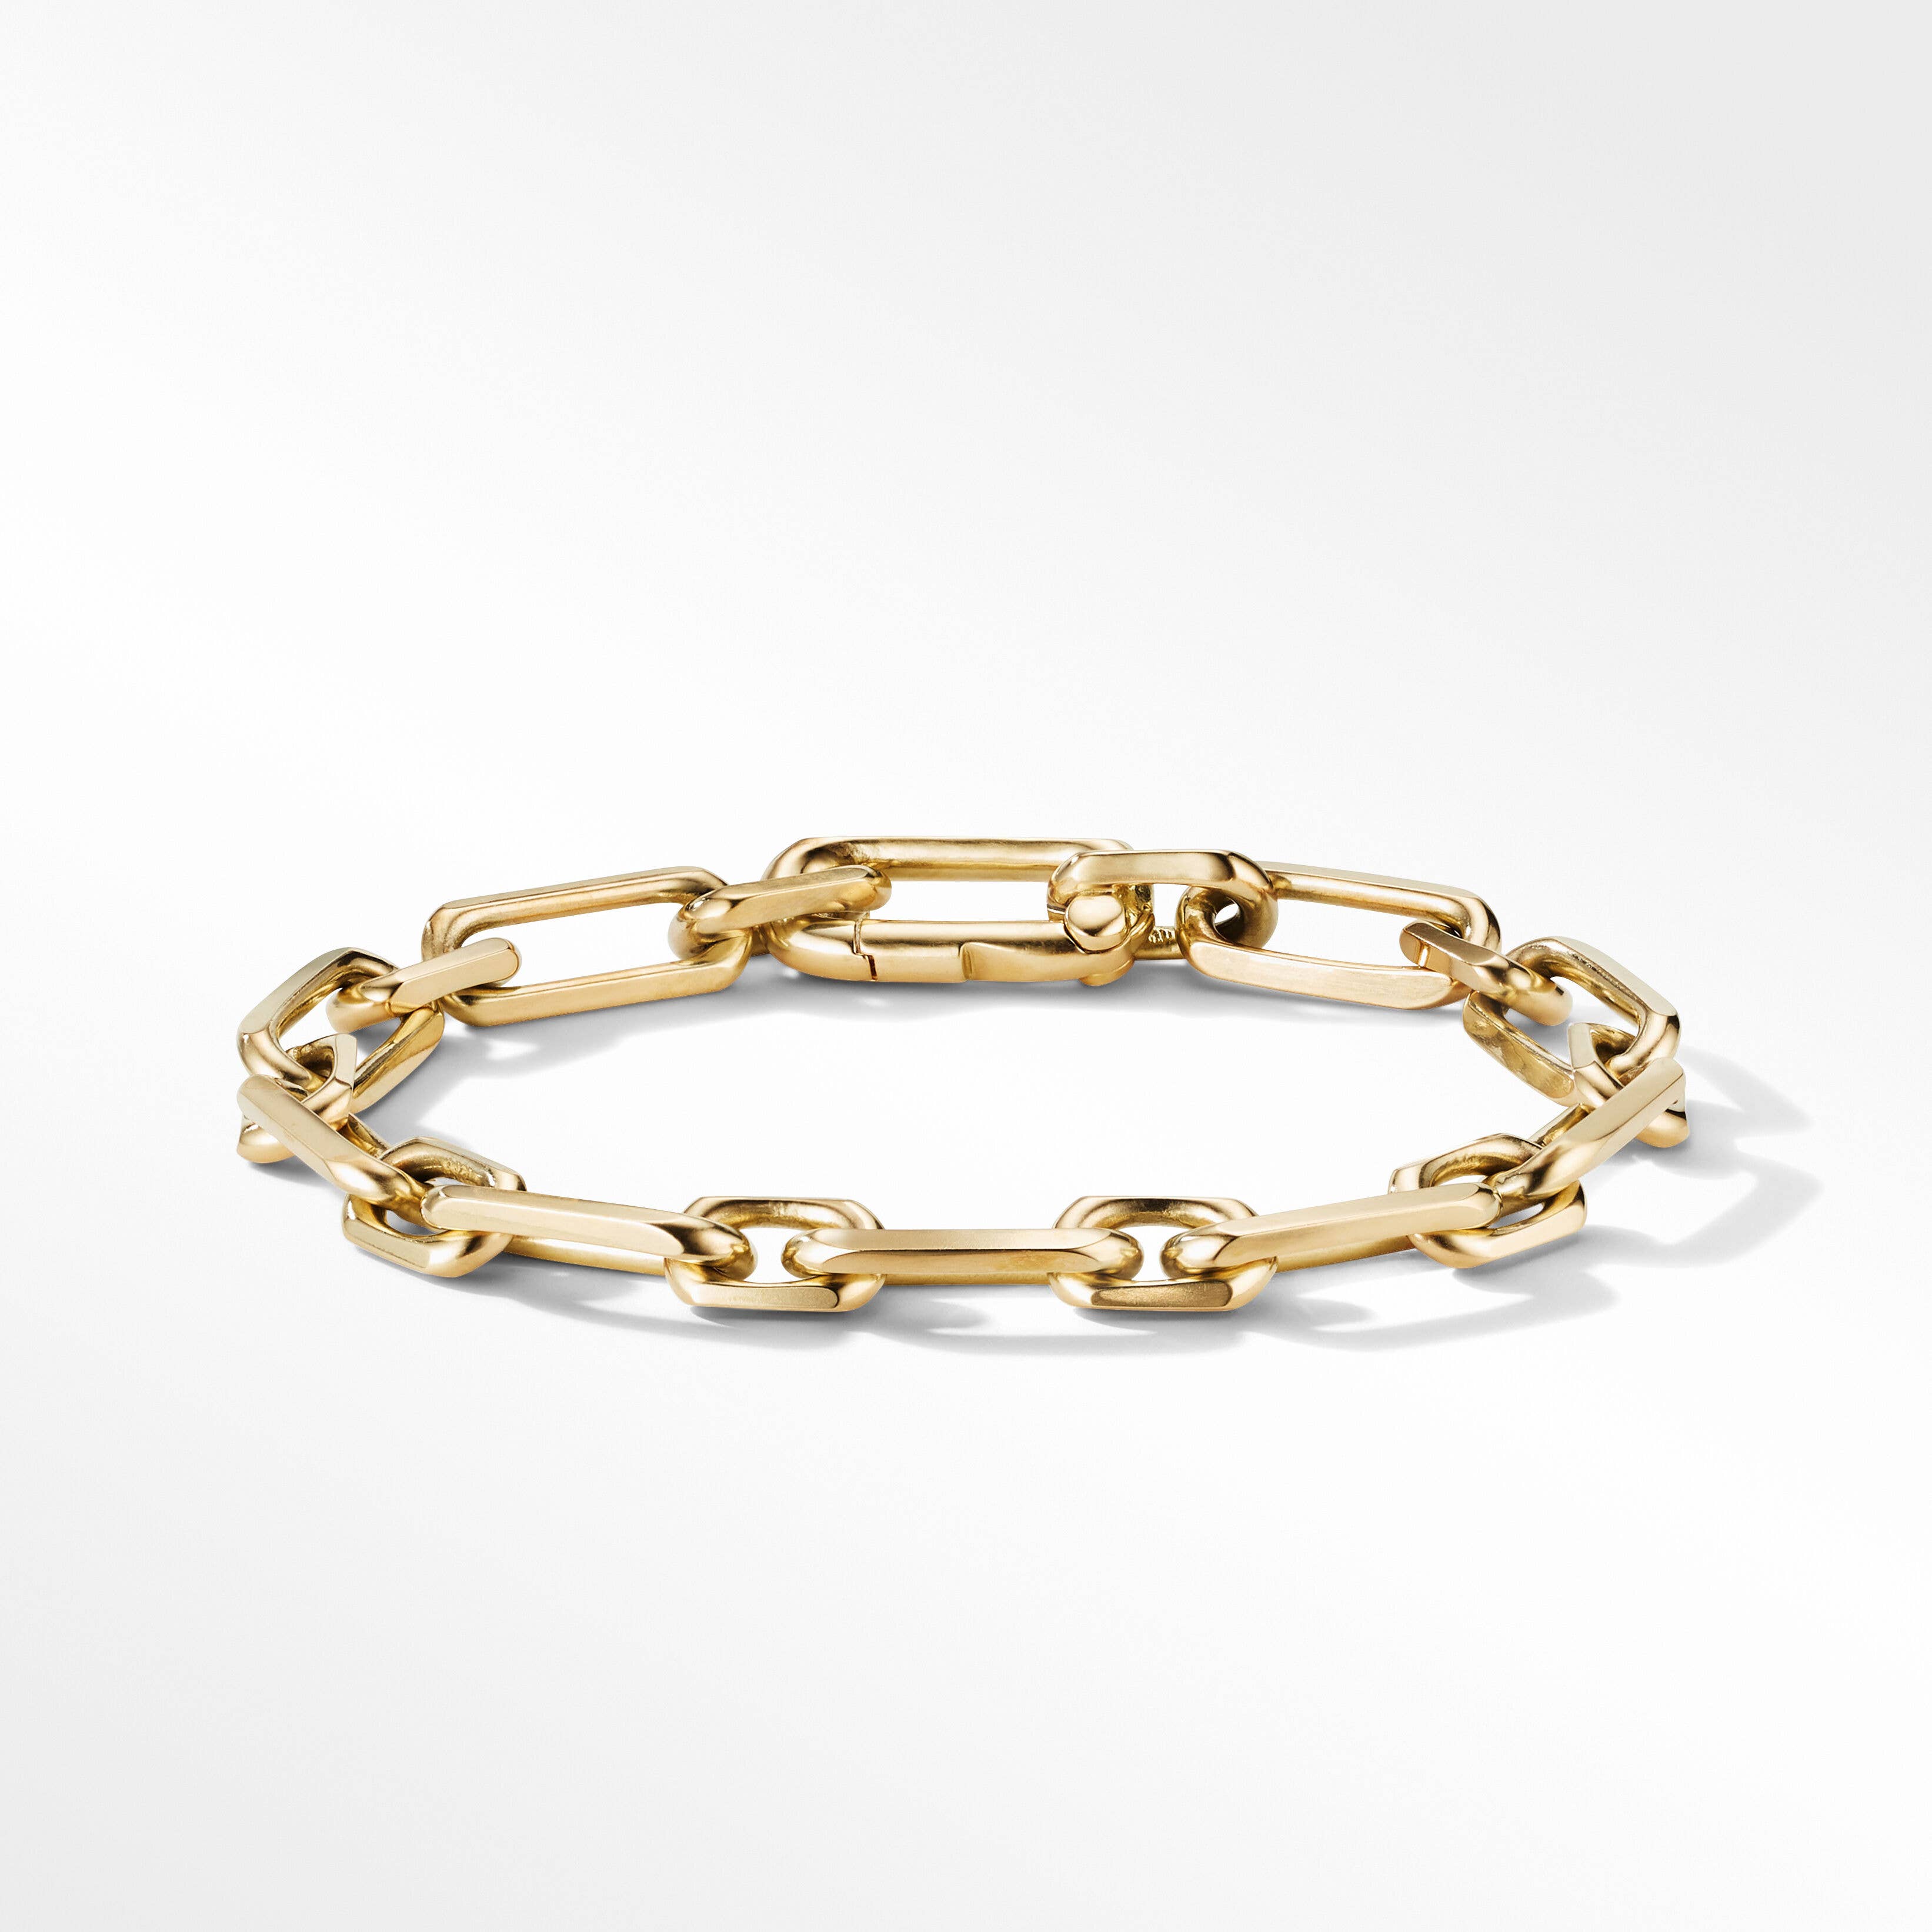 Elongated Open Link Chain Bracelet in 18K Yellow Gold